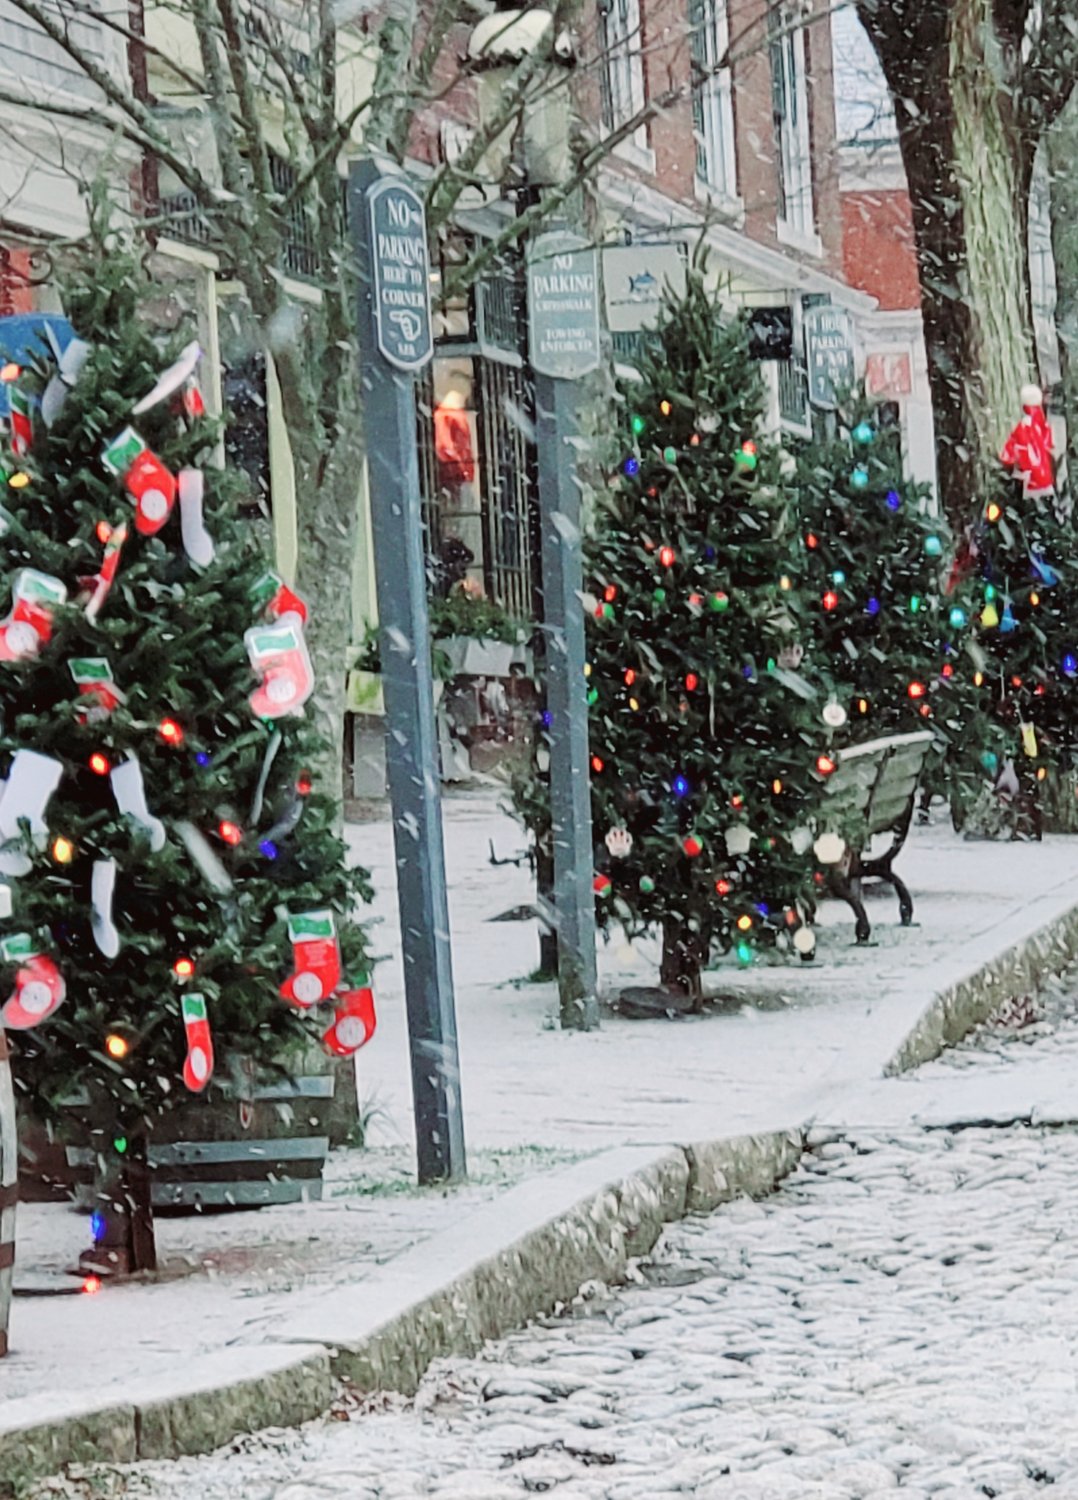 Snow falls on a deserted Main Street Christmas Eve morning.